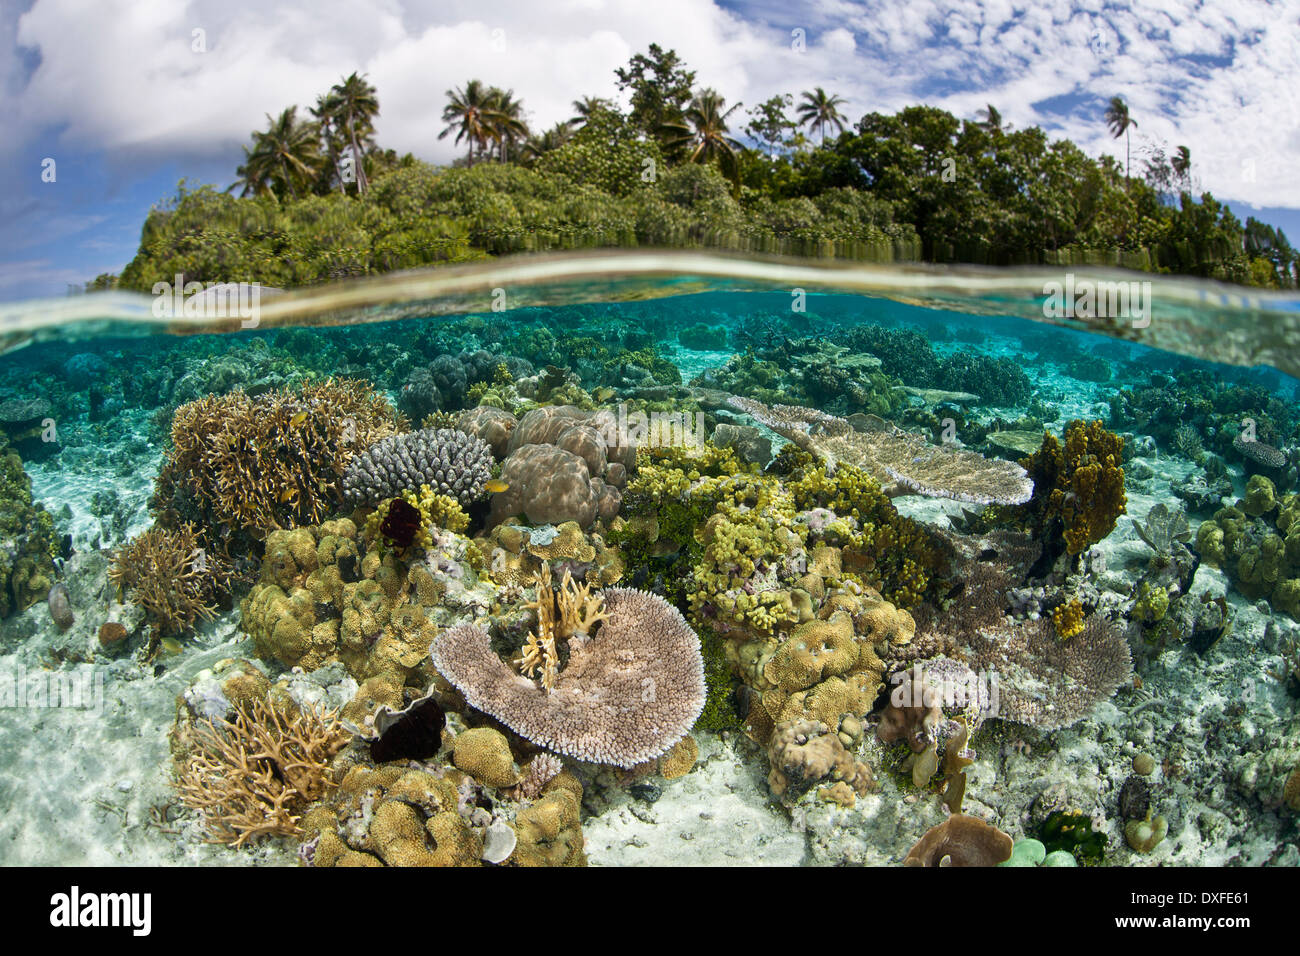 Laguna di isola tropicale, Melanesia, Oceano Pacifico Isole Salomone Foto  stock - Alamy